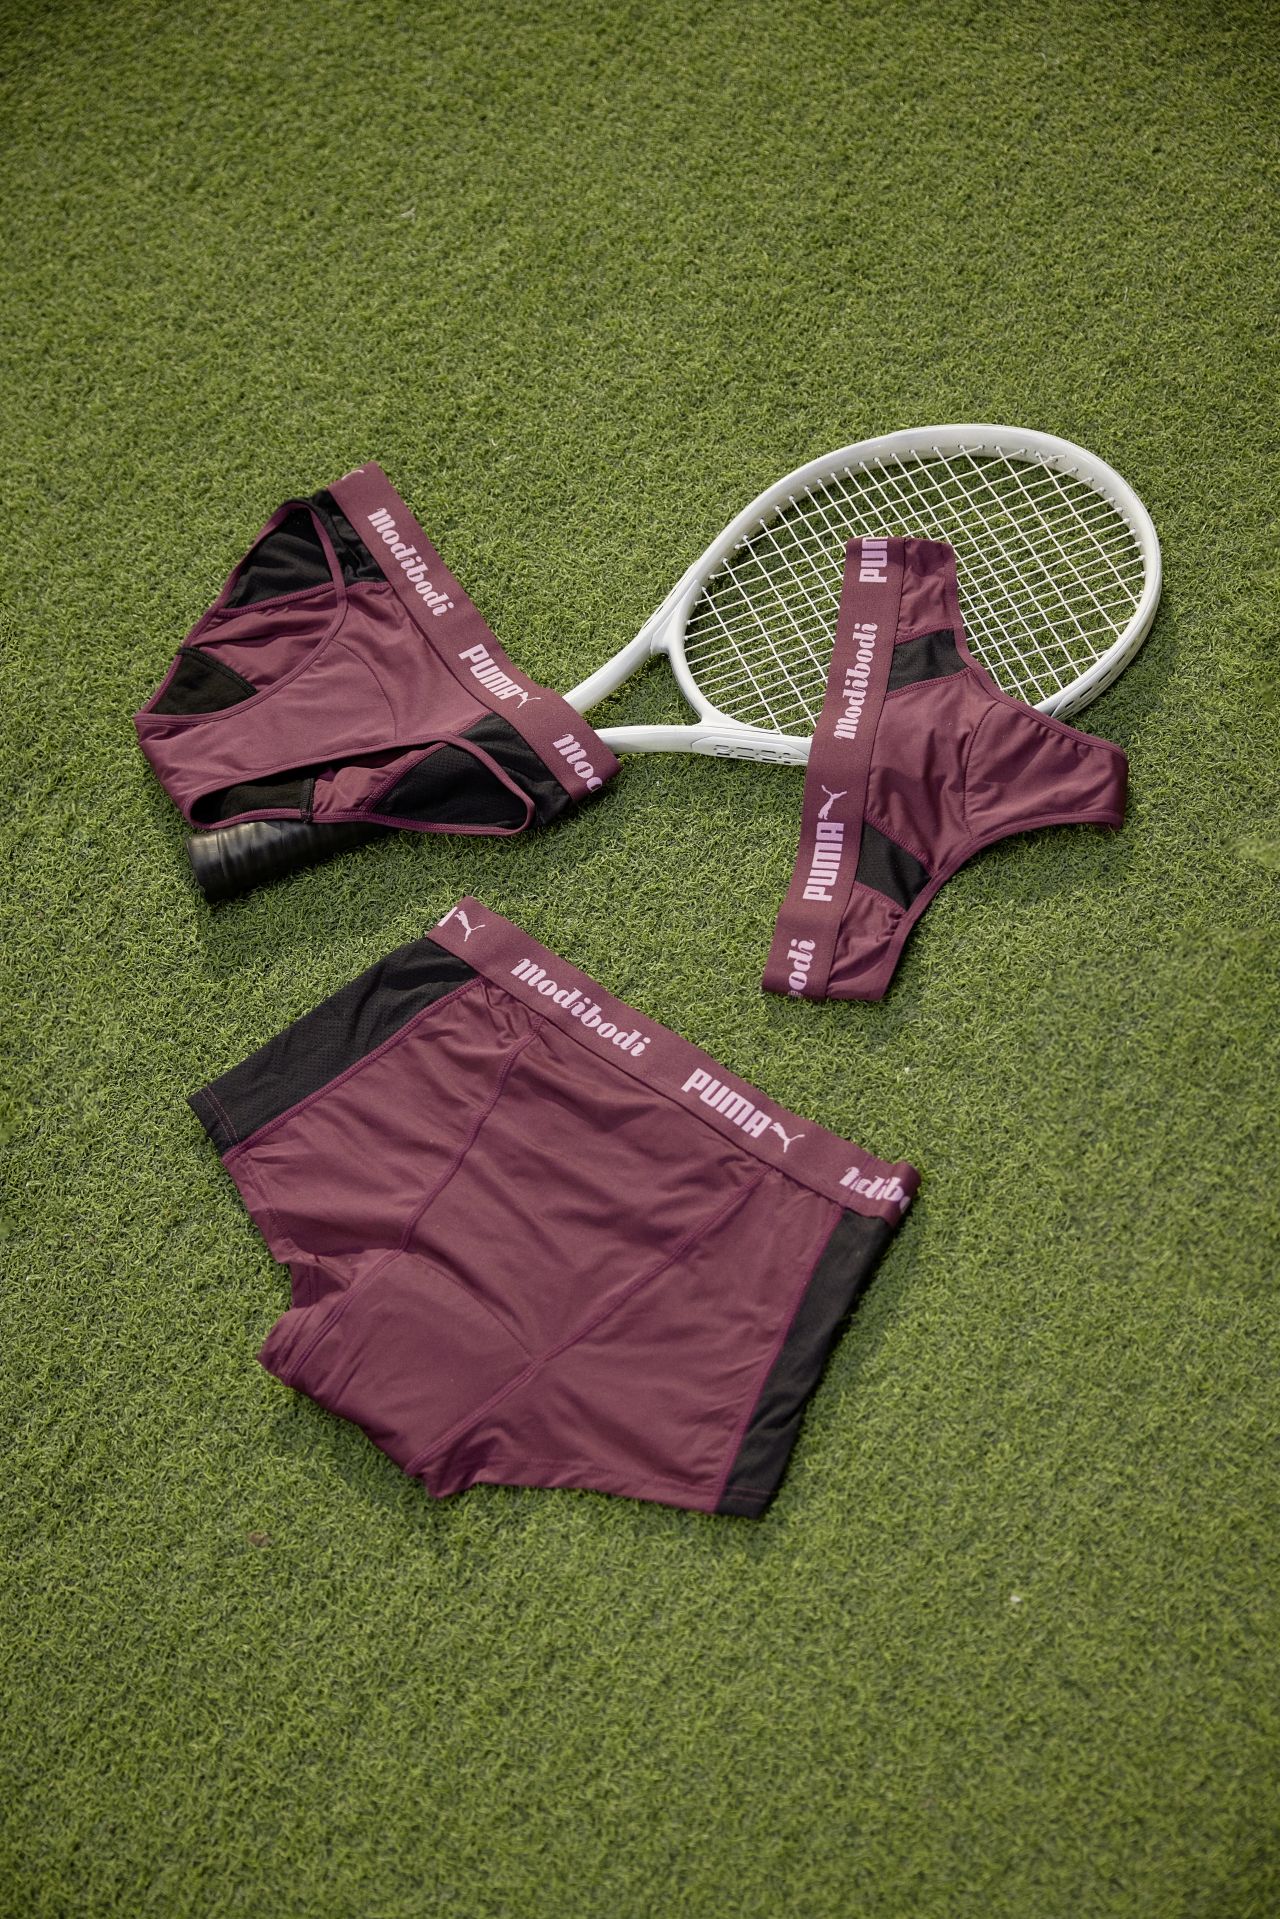 PUMA x Modibodi period underwear for women in sports